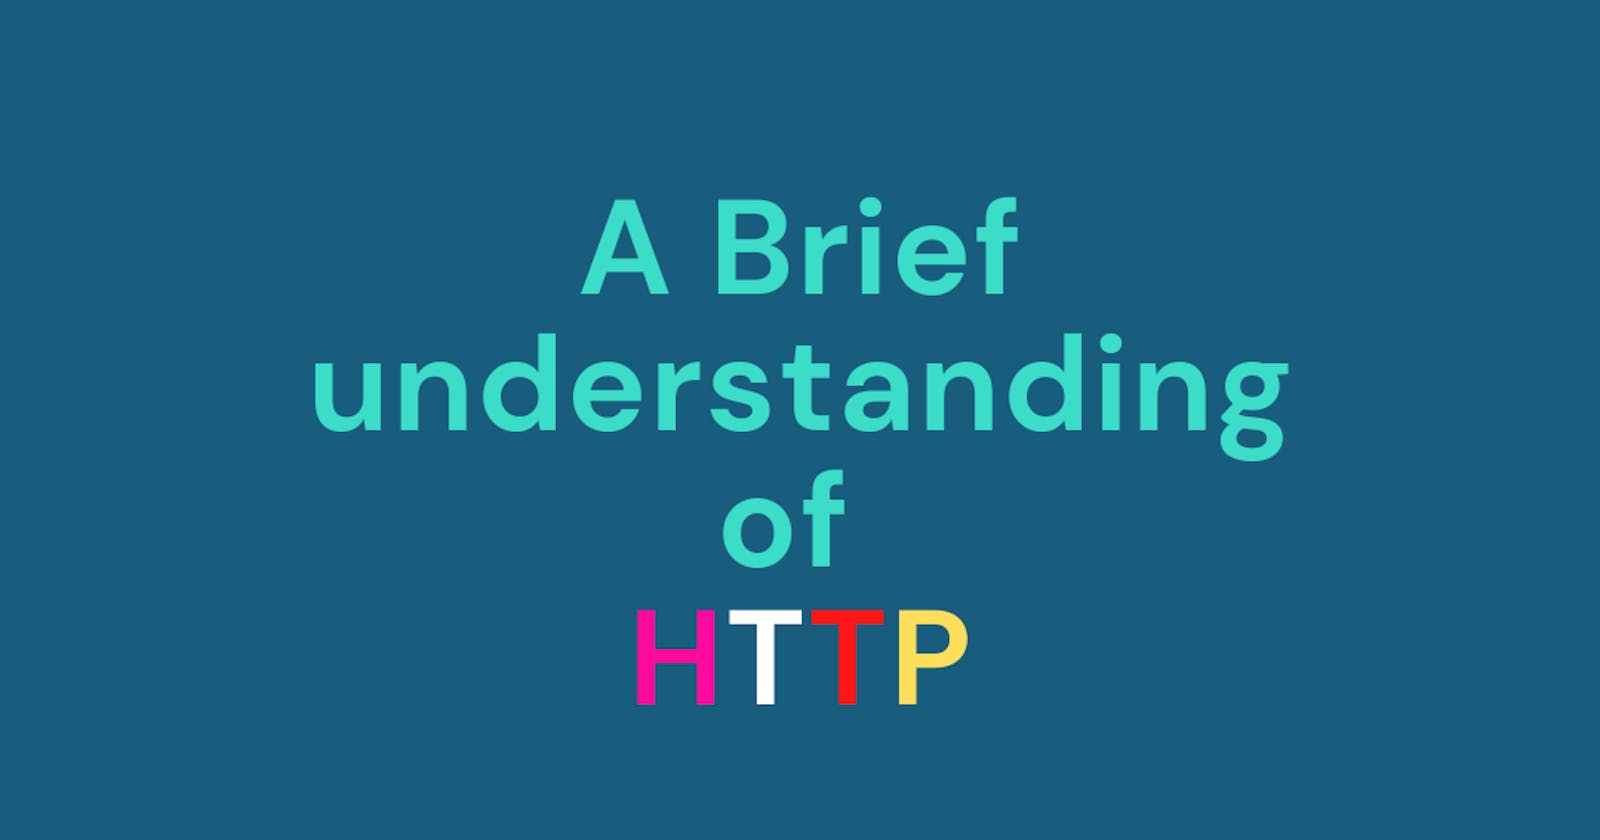 A Brief Understanding of HTTP